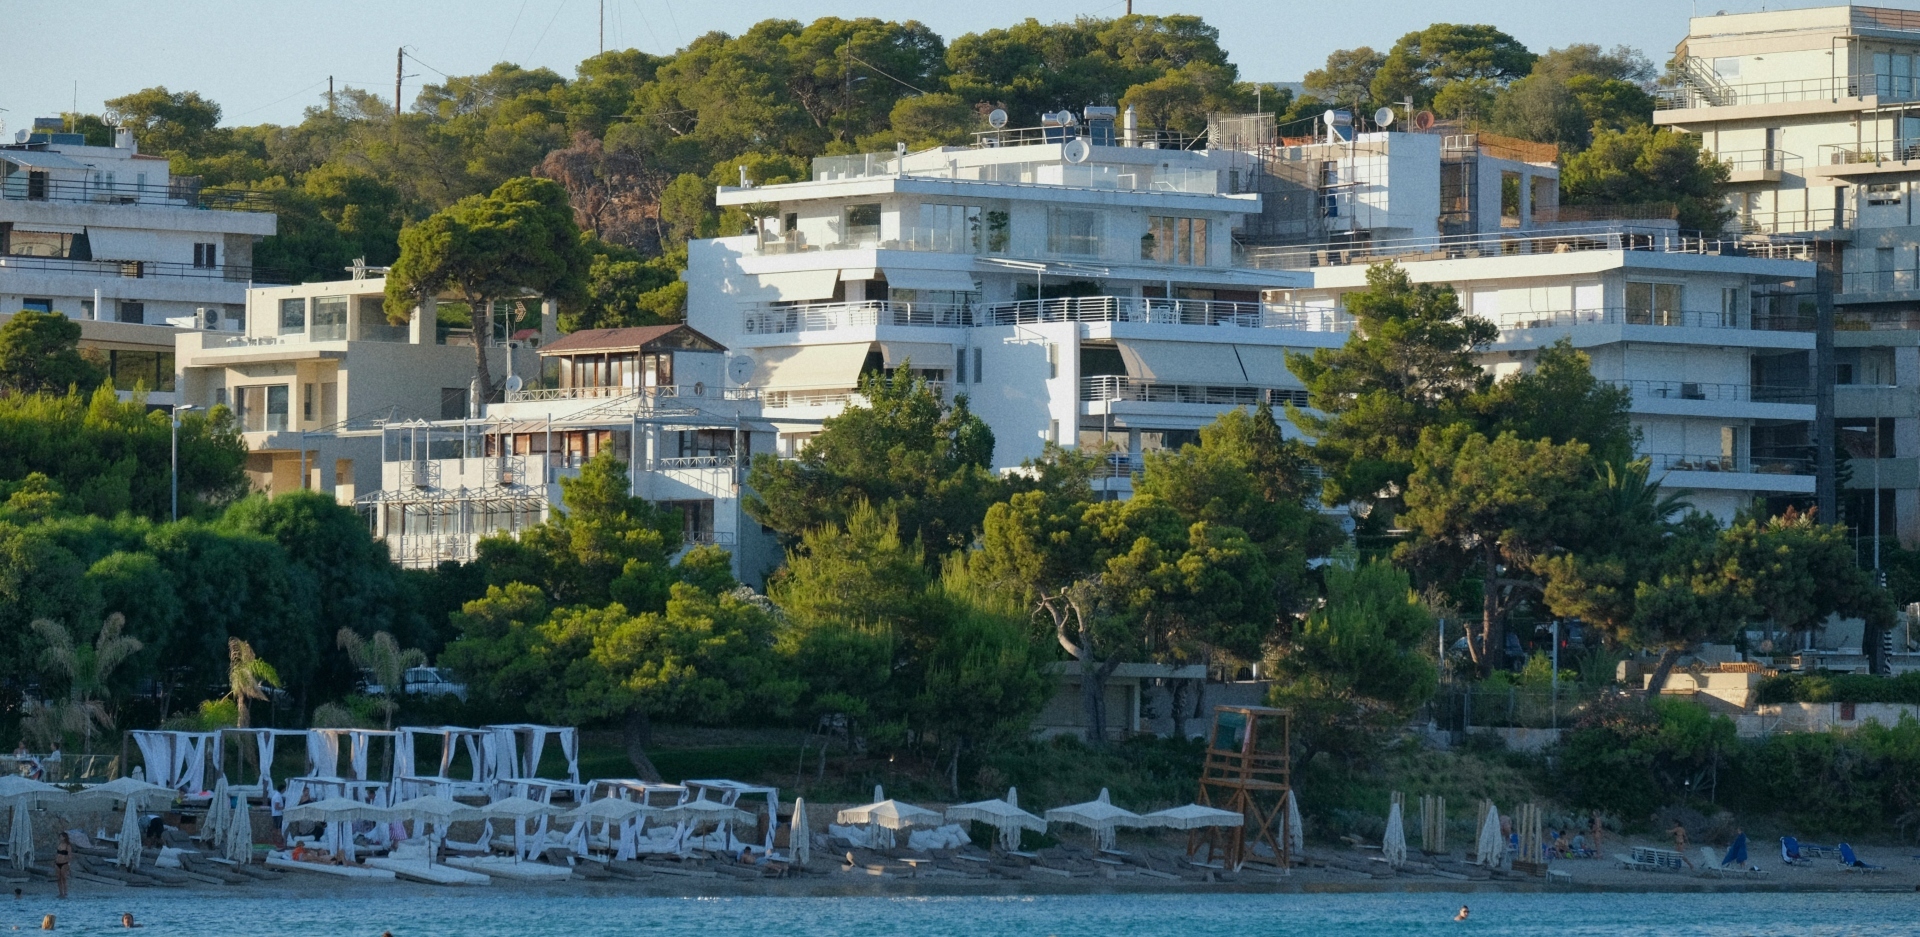 H ακριβότερη περιοχή της Ελλάδας για ενοικίαση και πώληση κατοικίας